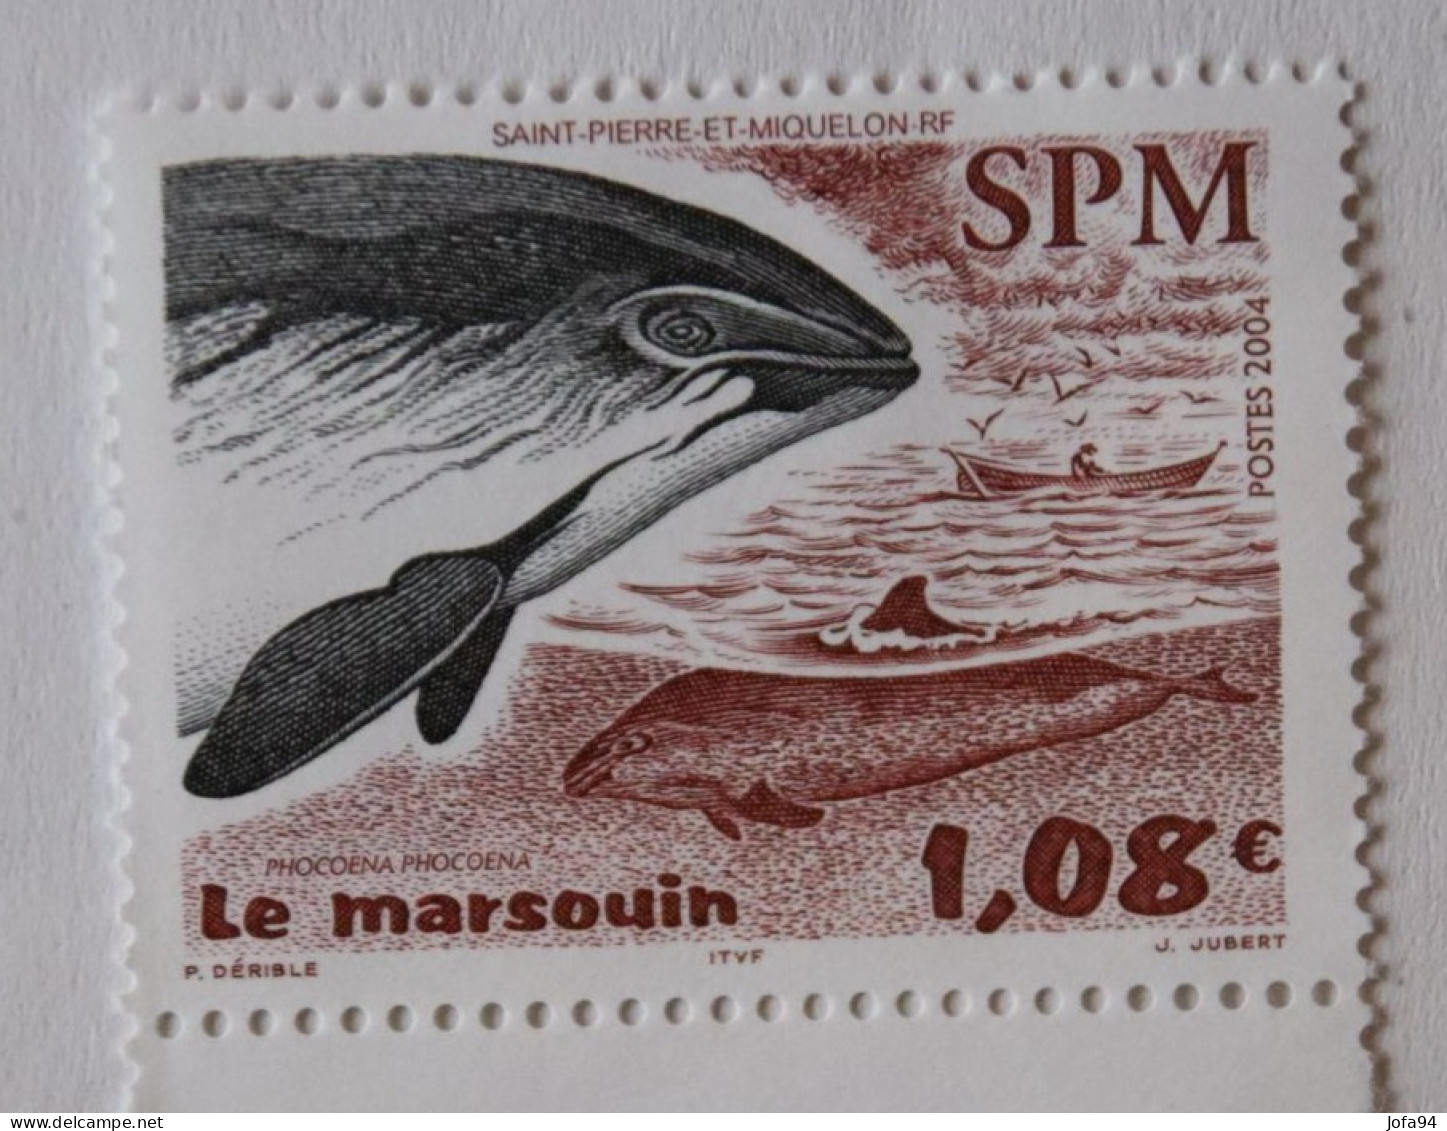 SPM 2004  Faune Marine Le Marsouin  YT 813  Neuf - Unused Stamps